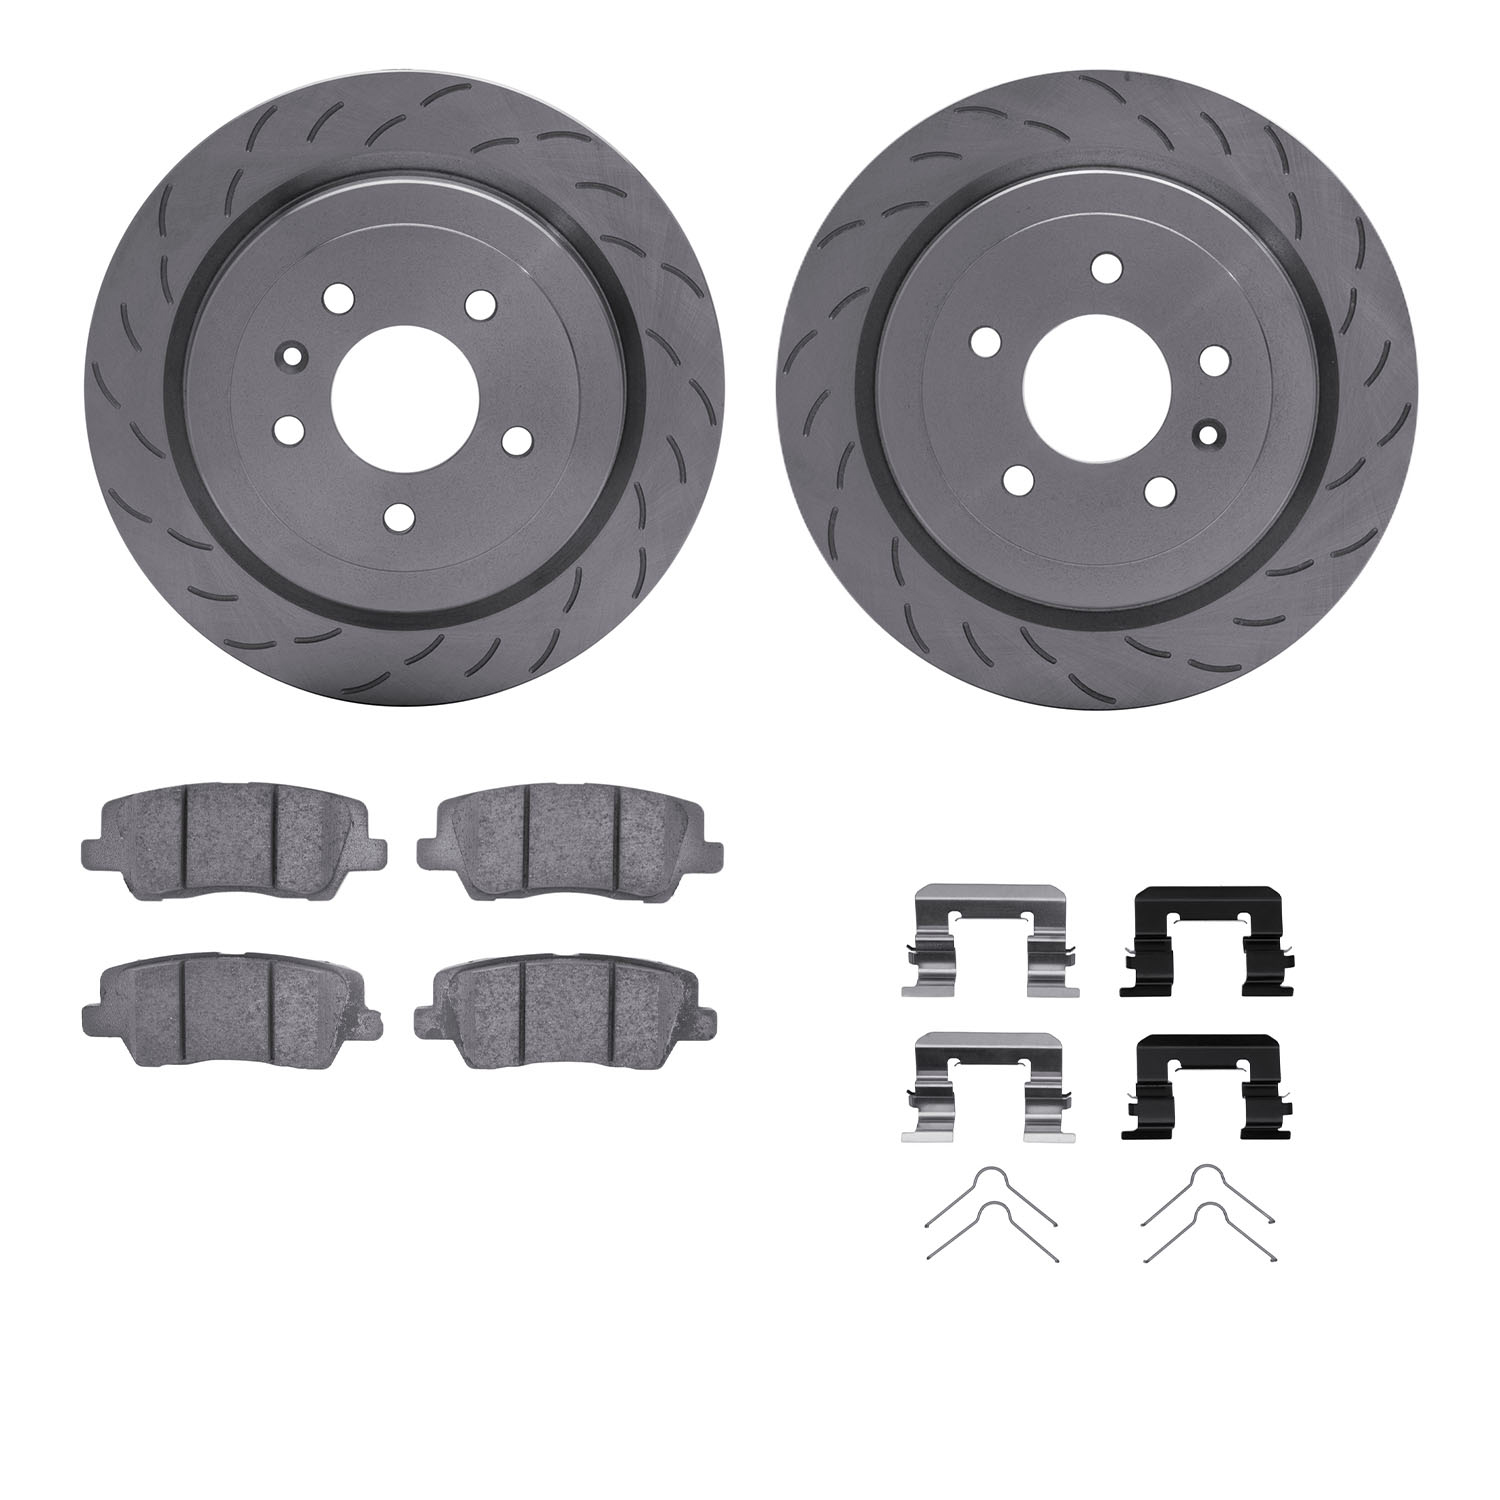 6312-46062 Brake Rotors with 3000-Series Ceramic Brake Pads Kit with Hardware, 2016-2019 GM, Position: Rear